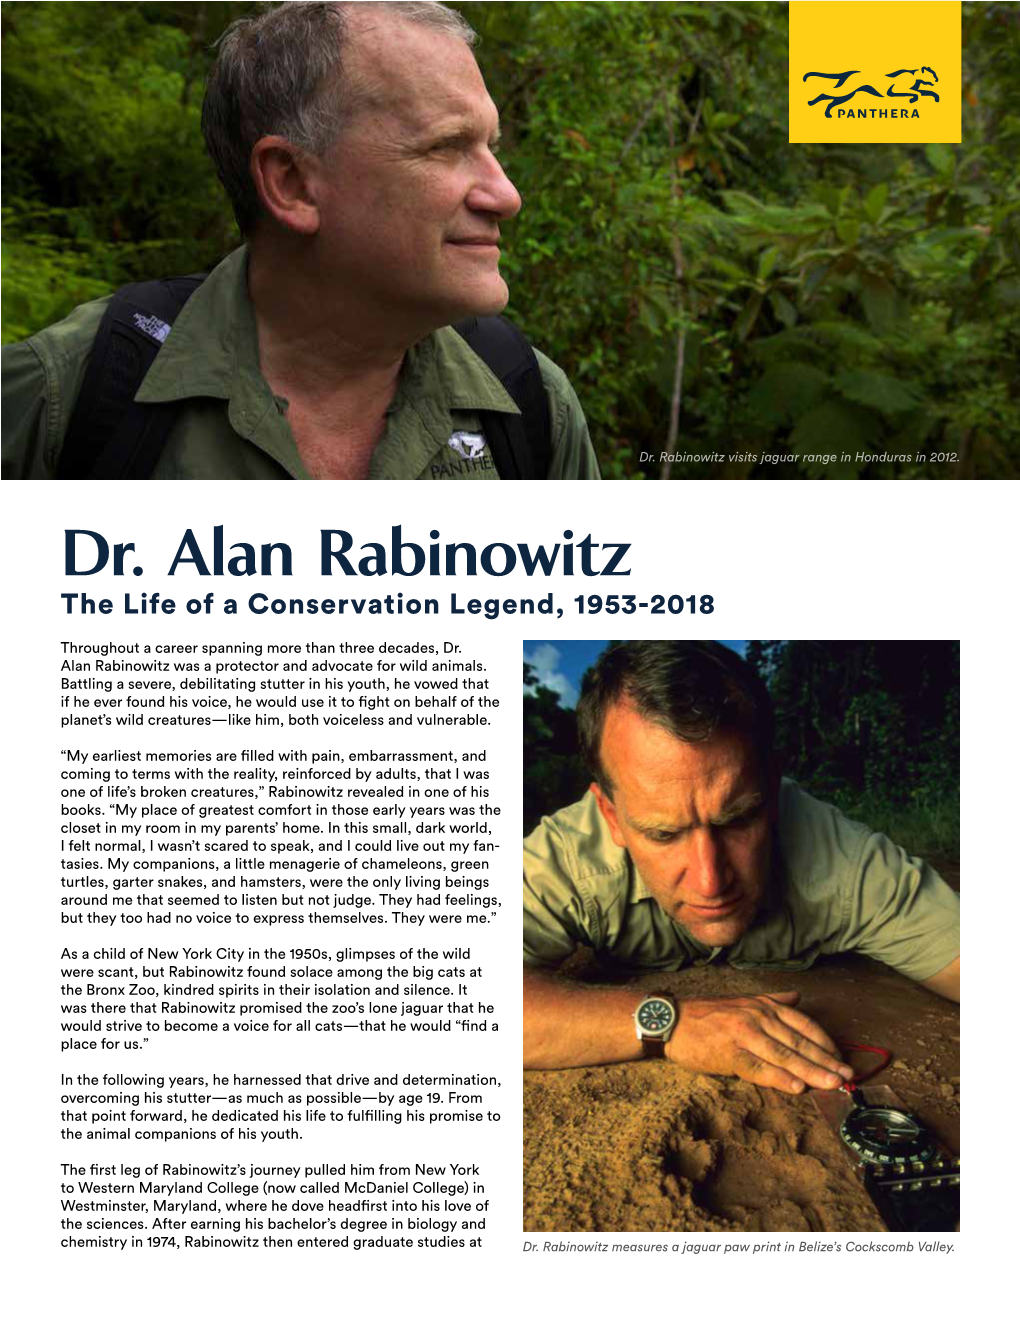 Alan Rabinowitz Biography